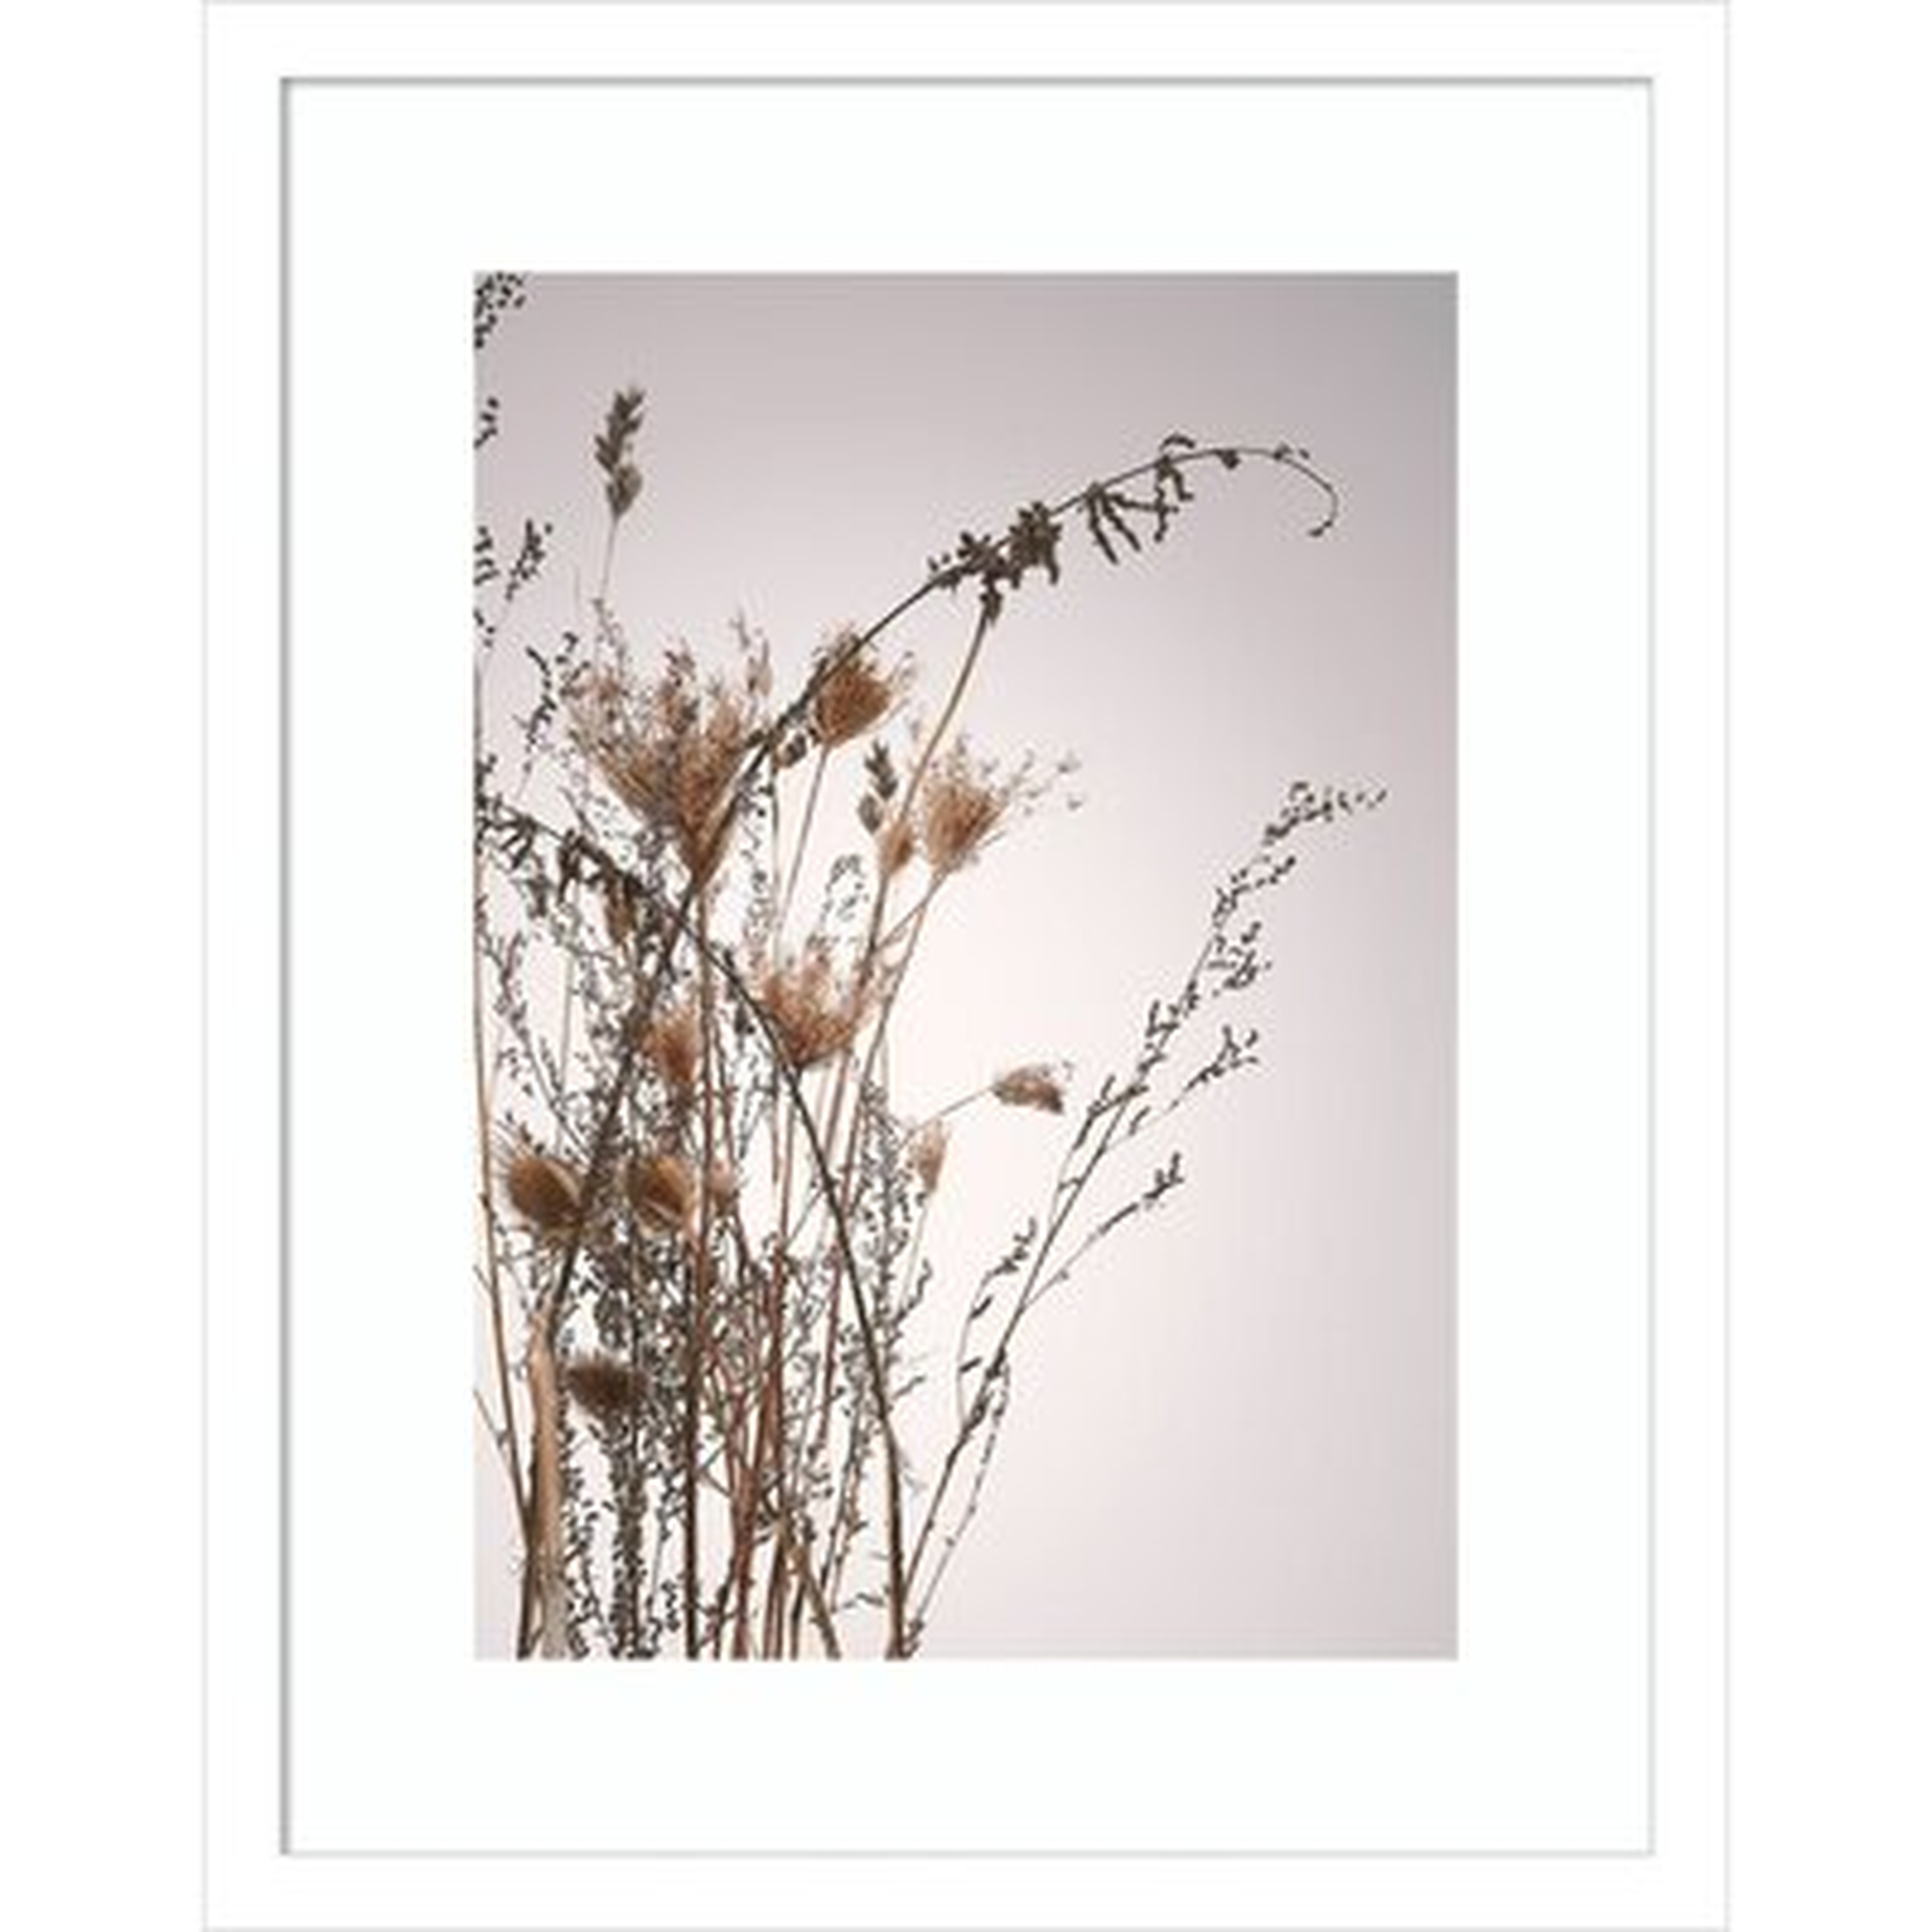 Everlasting Floral by Design Fabrikken - Picture Frame Photograph Print on Paper - AllModern